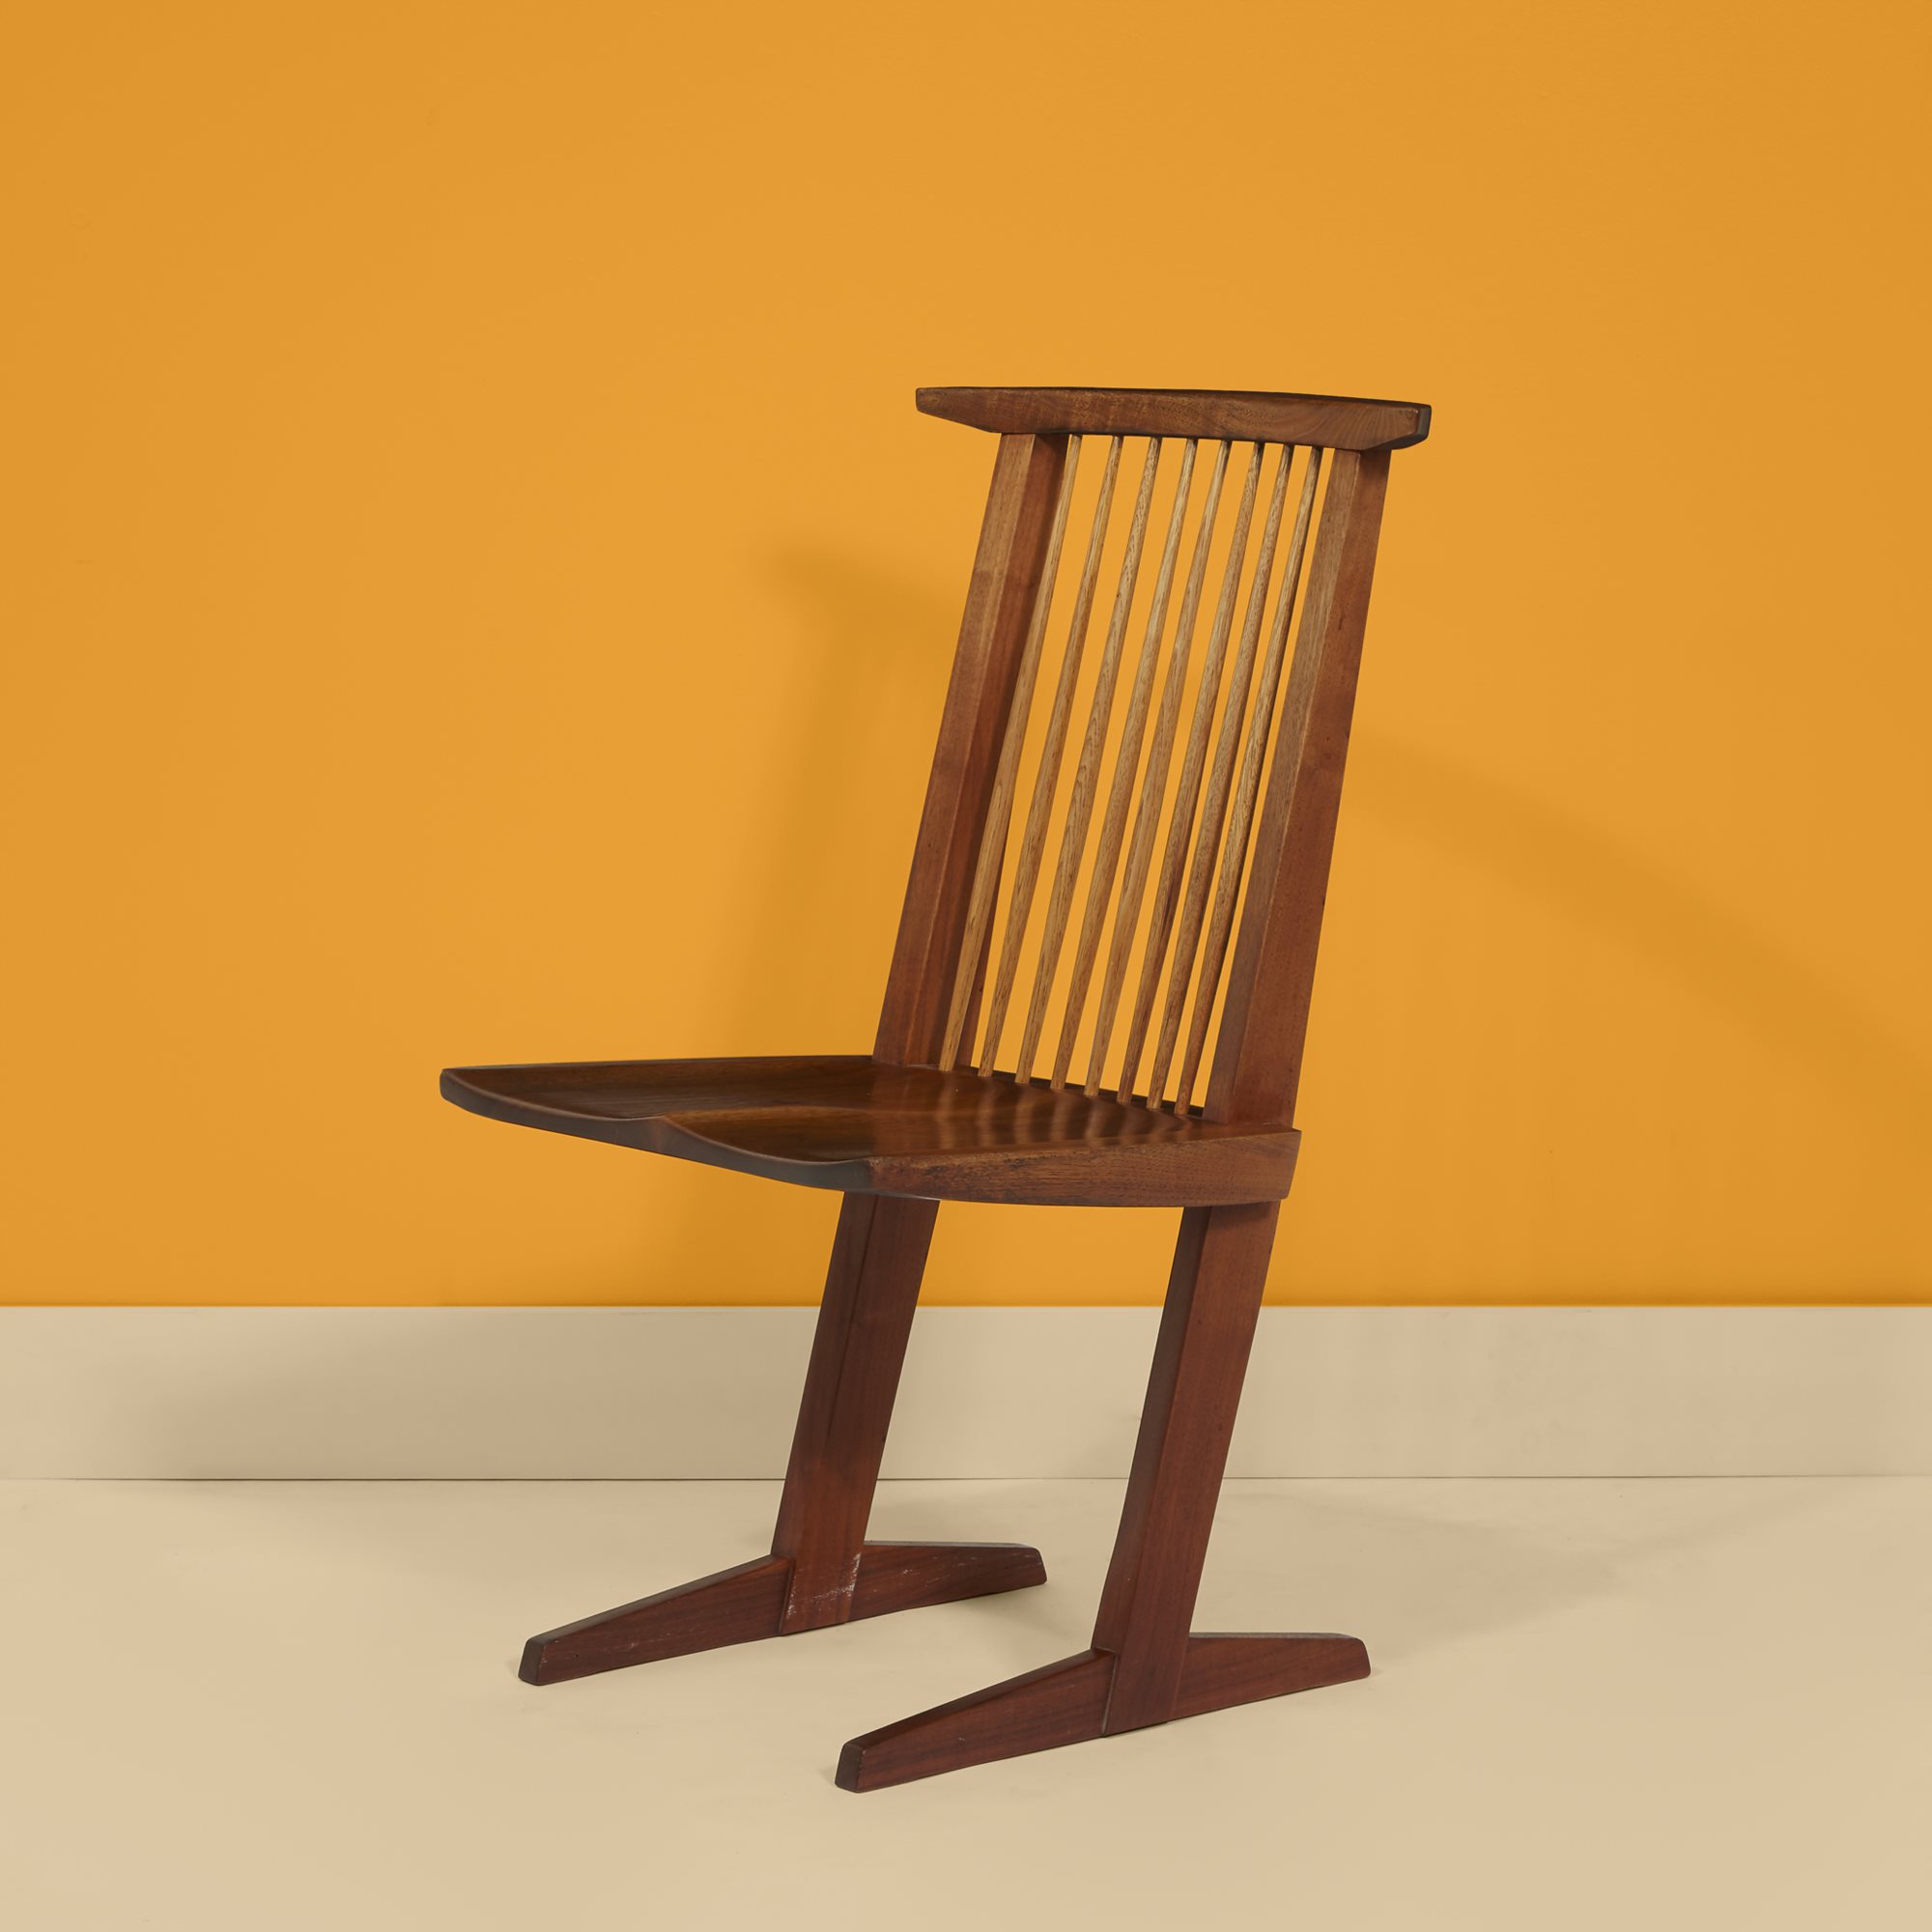 Lot 32  |  George Nakashima (American, 1905-1990), Conoid Chair, New Hope, Pennsylvania, 1967, $3,000-5,000